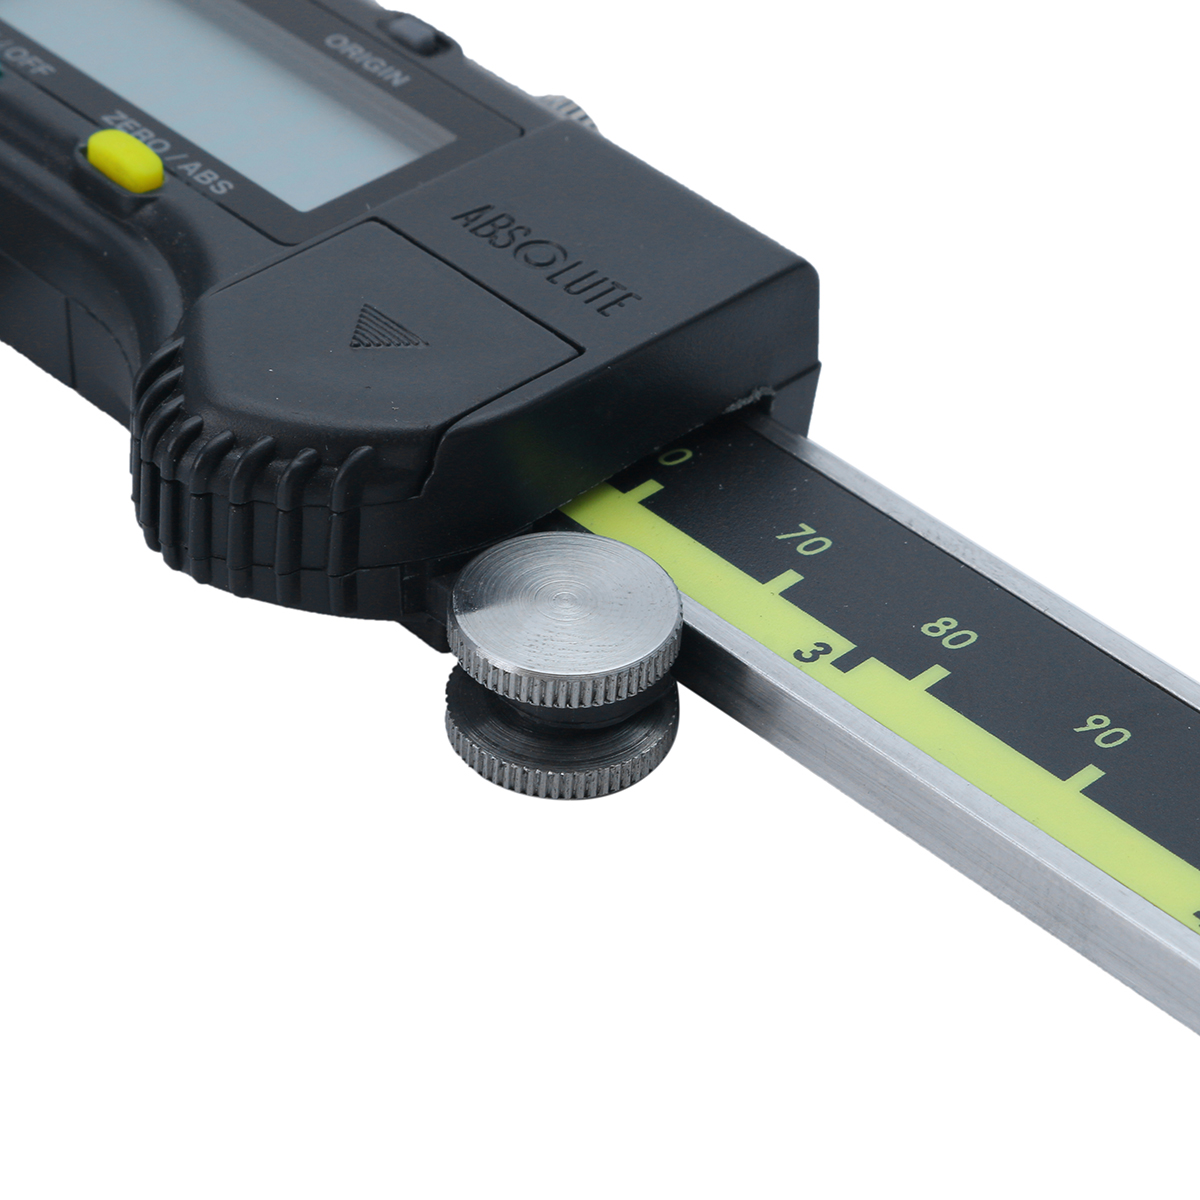 300mm-12inch-LCD-Electronic-Digital-Digimatic-Gauge-Vernier-Calipers-Measurement-1256515